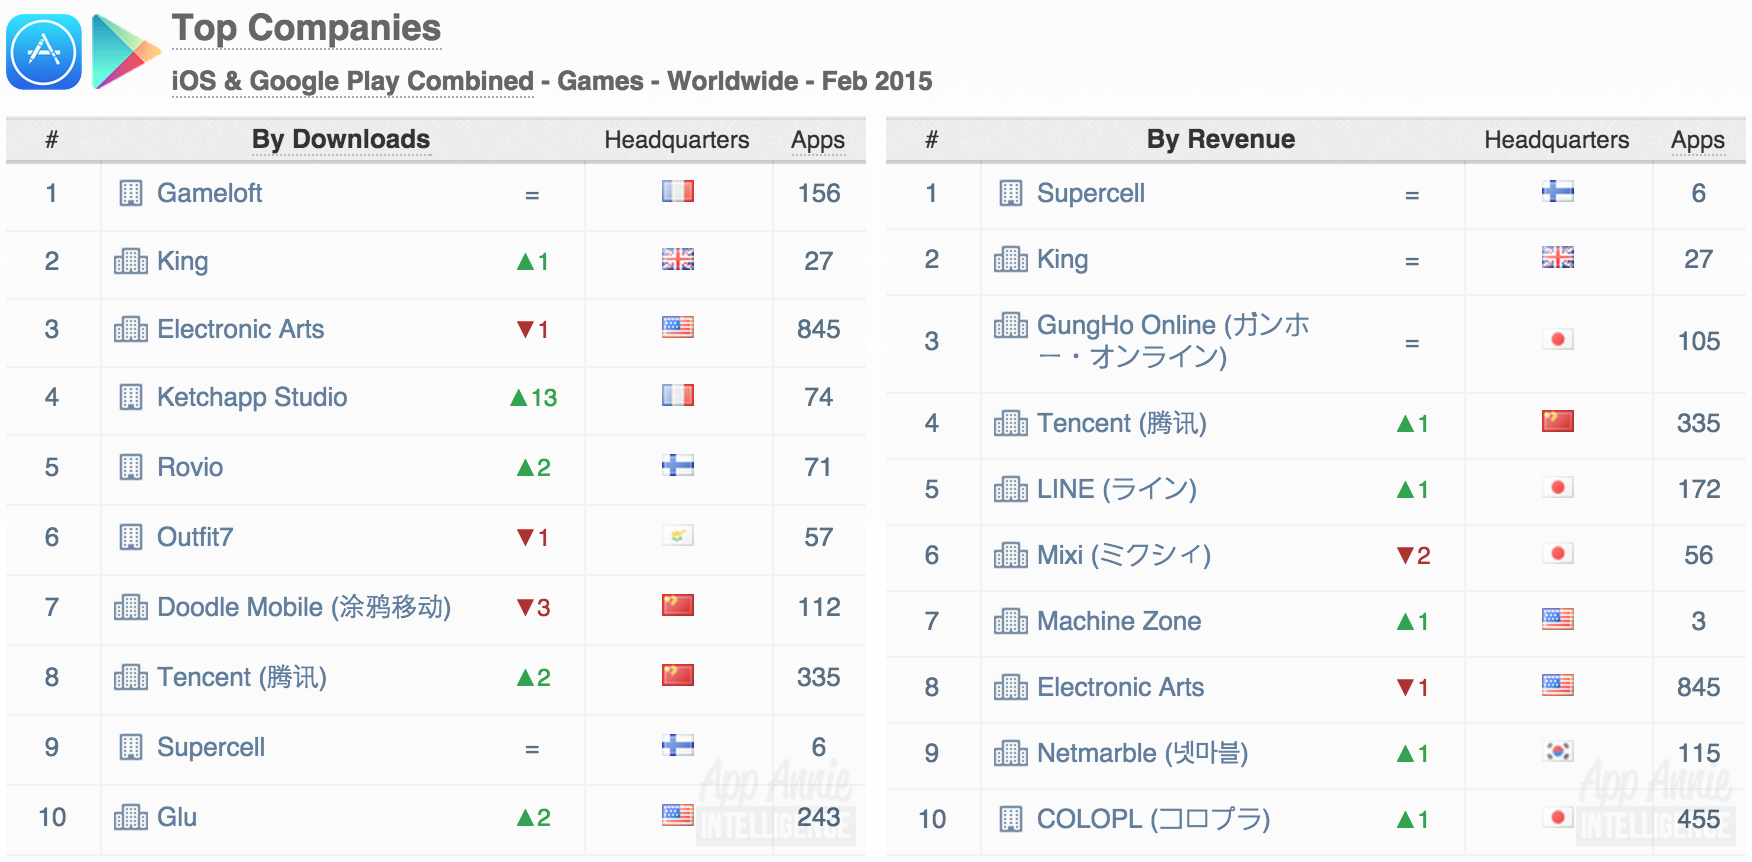 Top Companies iOS Google Play Games Worldwide February 2015